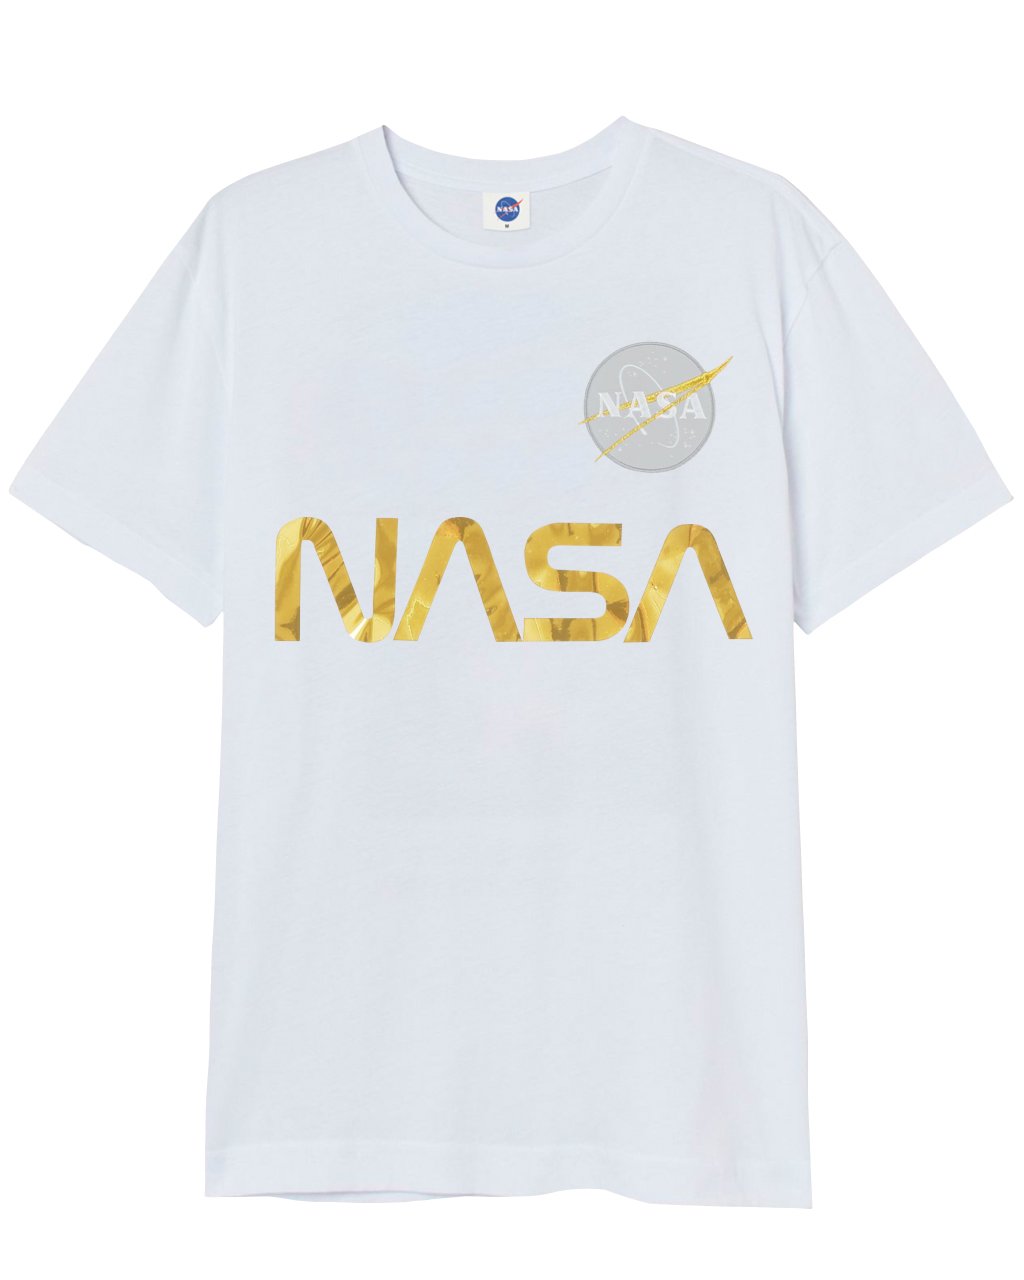 CAMISETA NASA  BLANCA GOLD